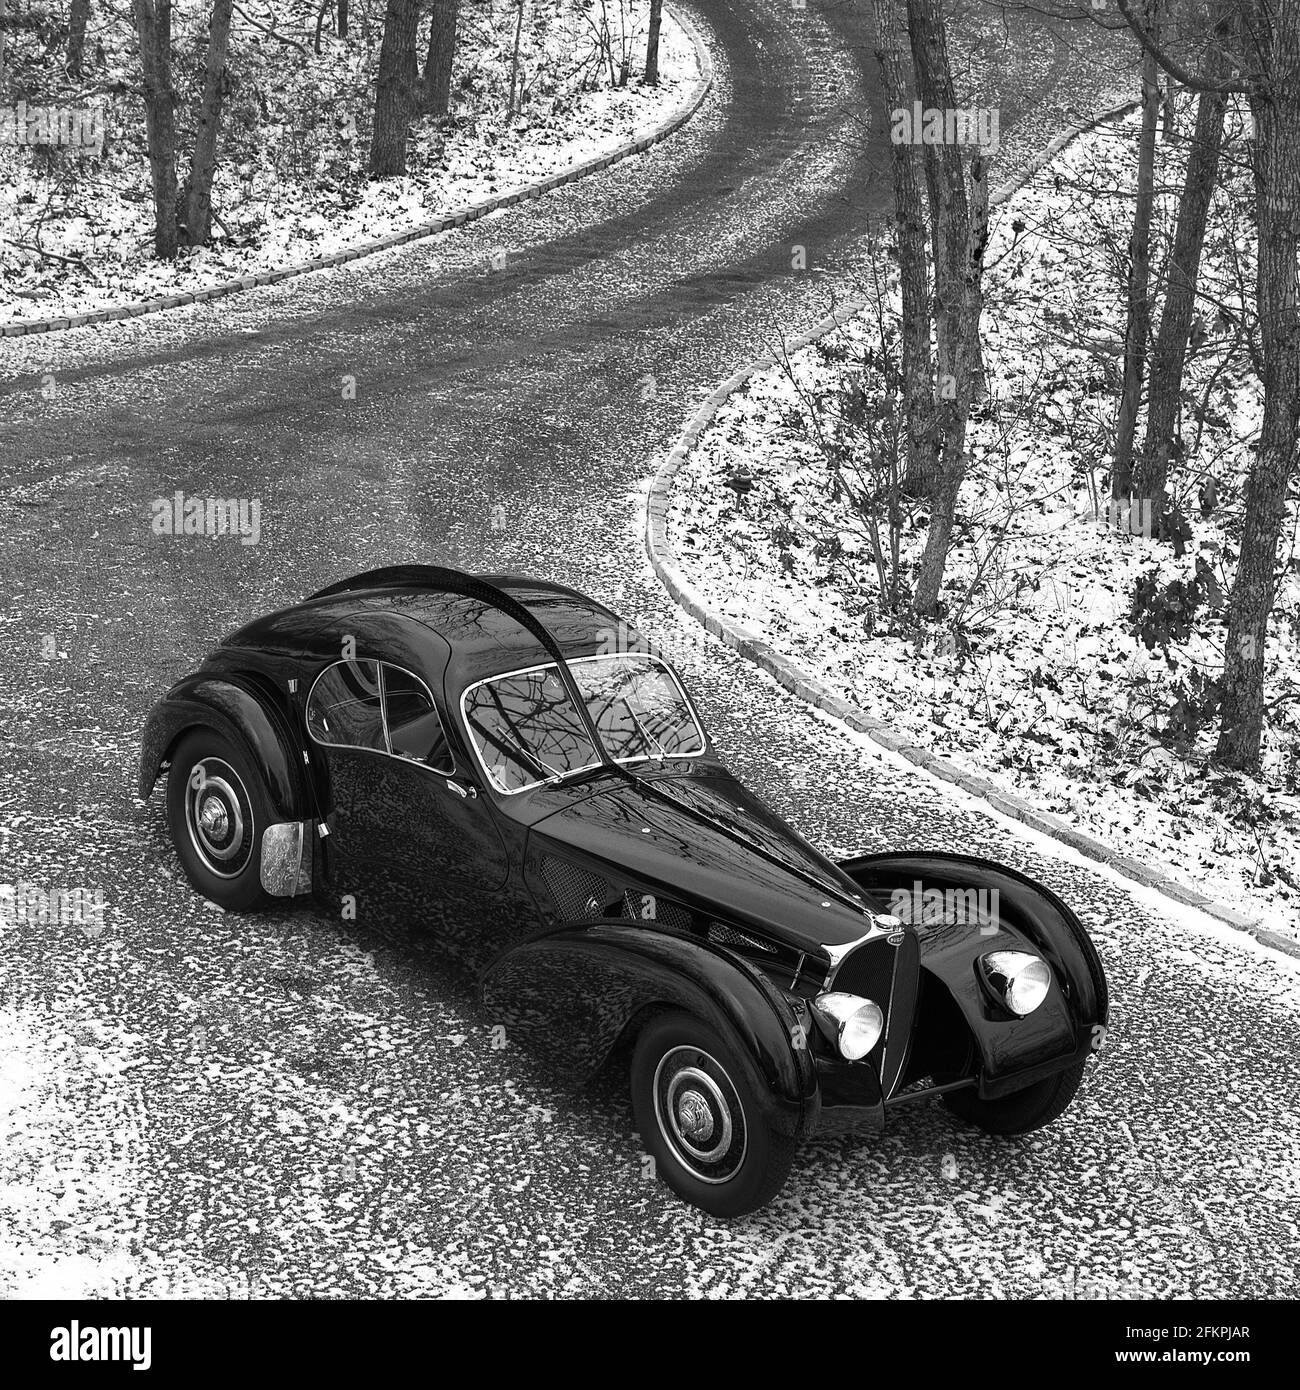 Bugatti type 57 Black and White Stock Photos & Images - Alamy